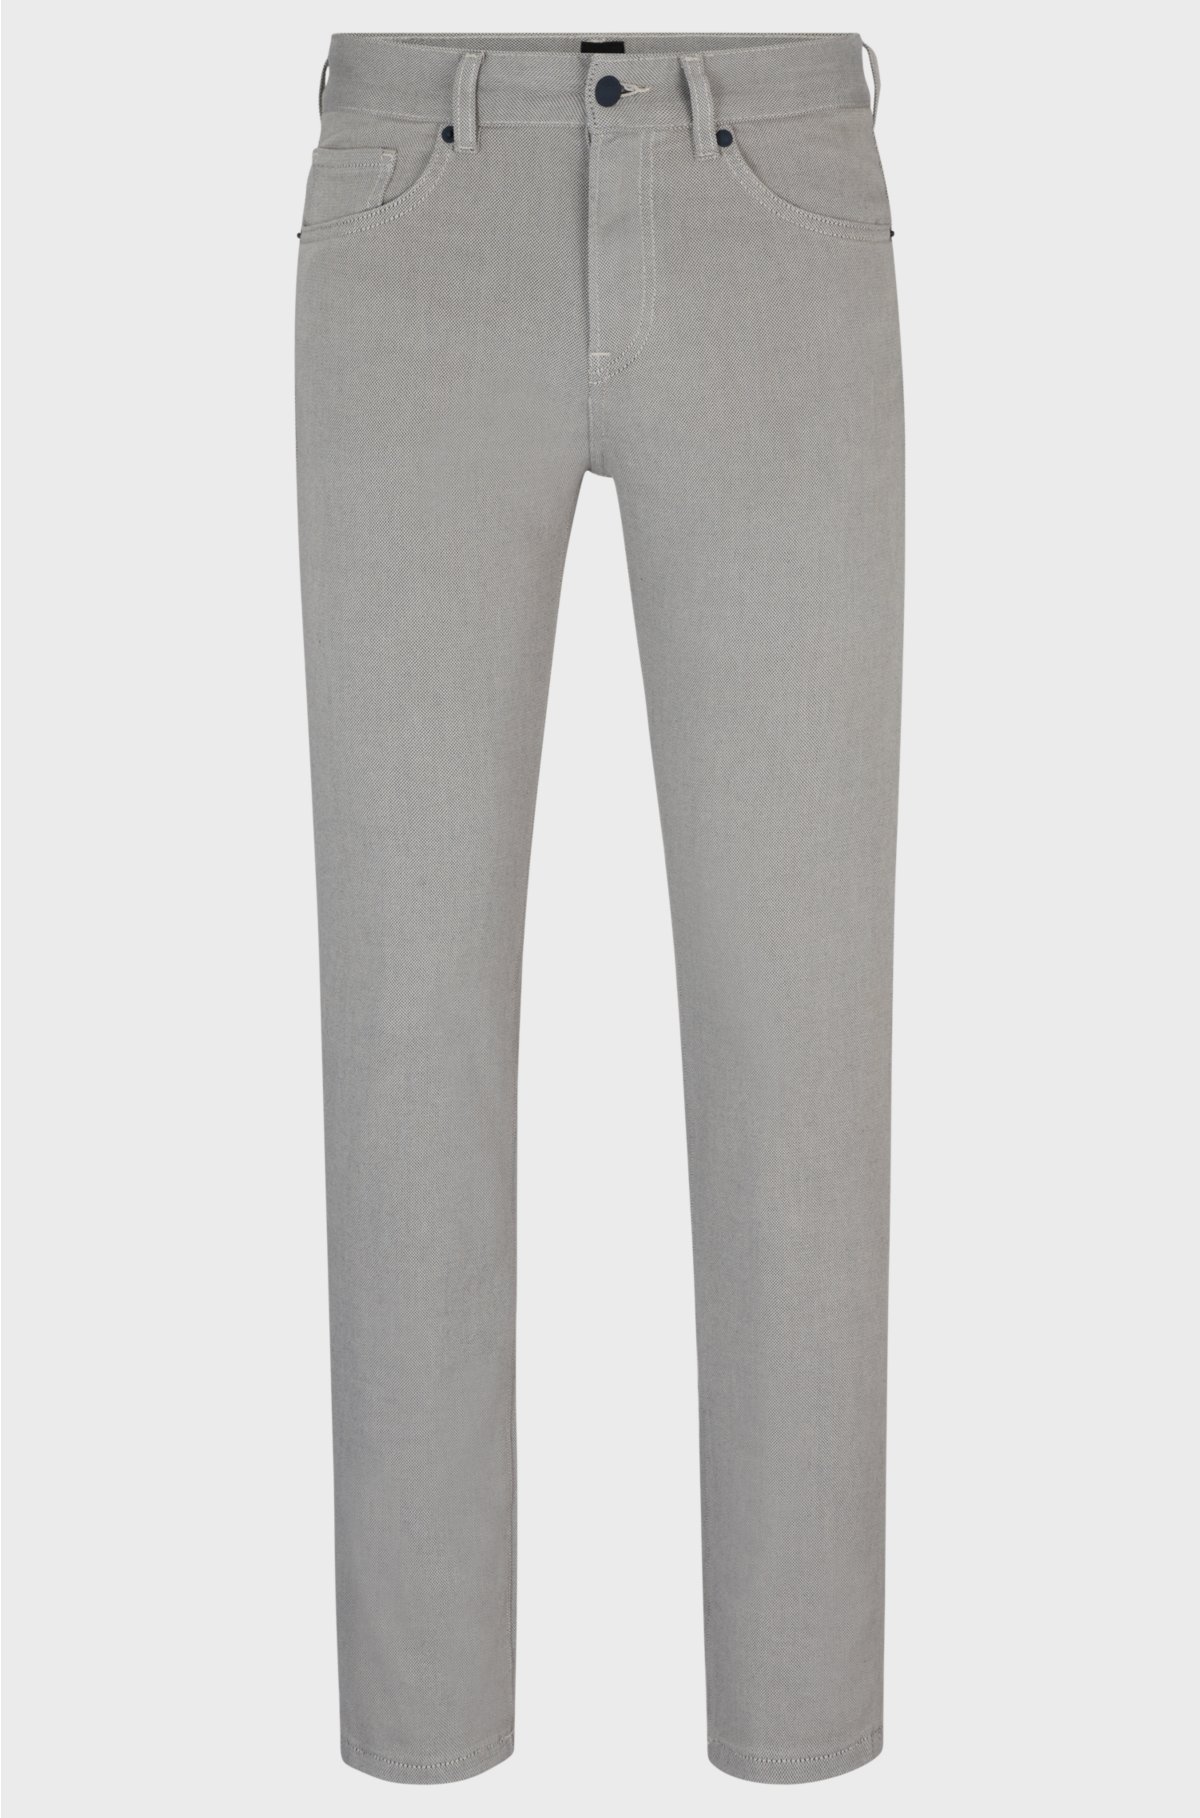 Regular-fit jeans in micro-structured denim, Grey